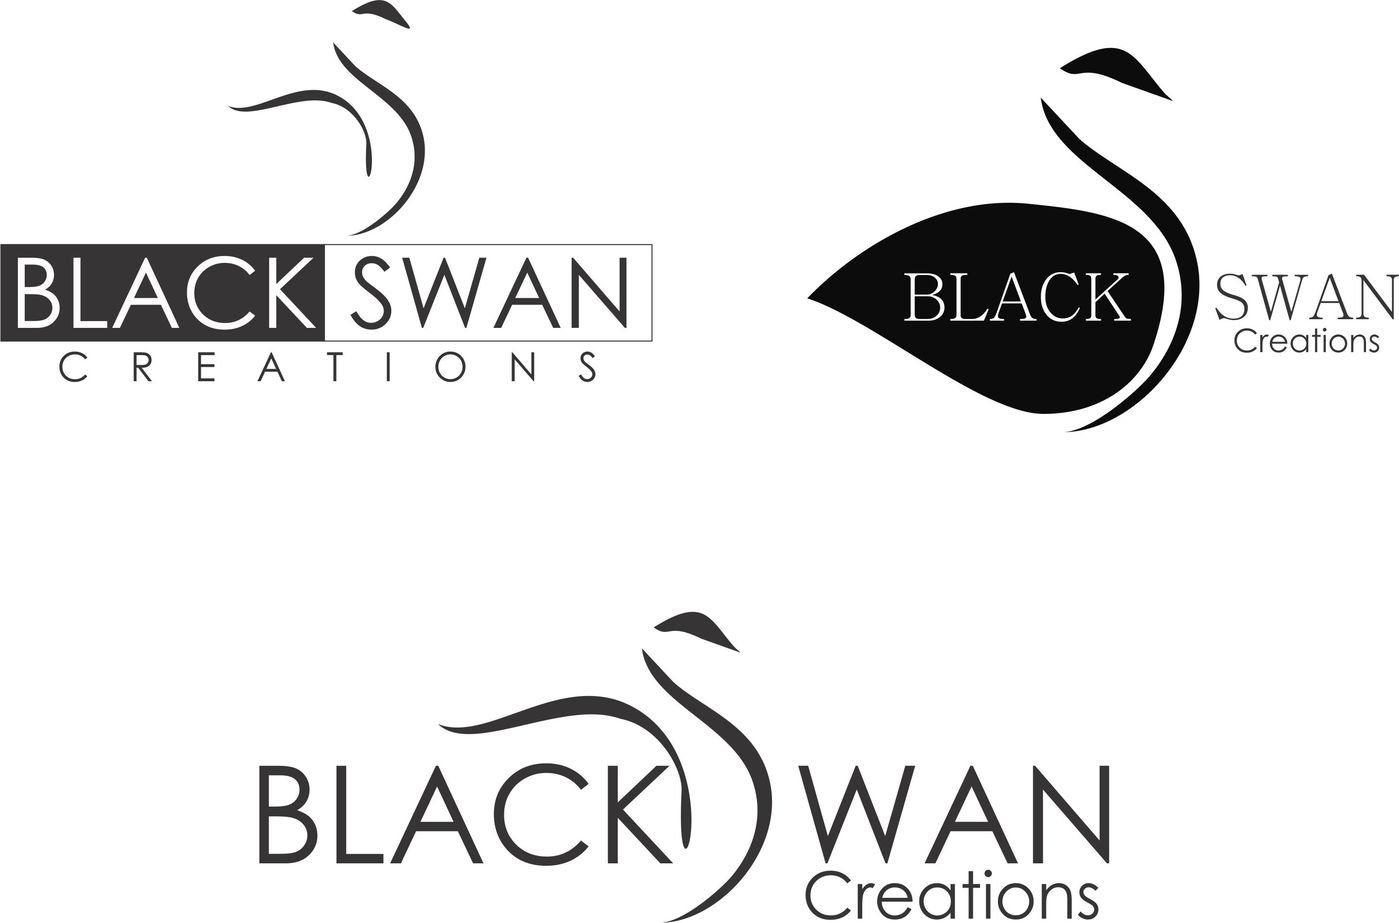 Black Swan Logo - black swan logo design by philip jacob at Coroflot.com